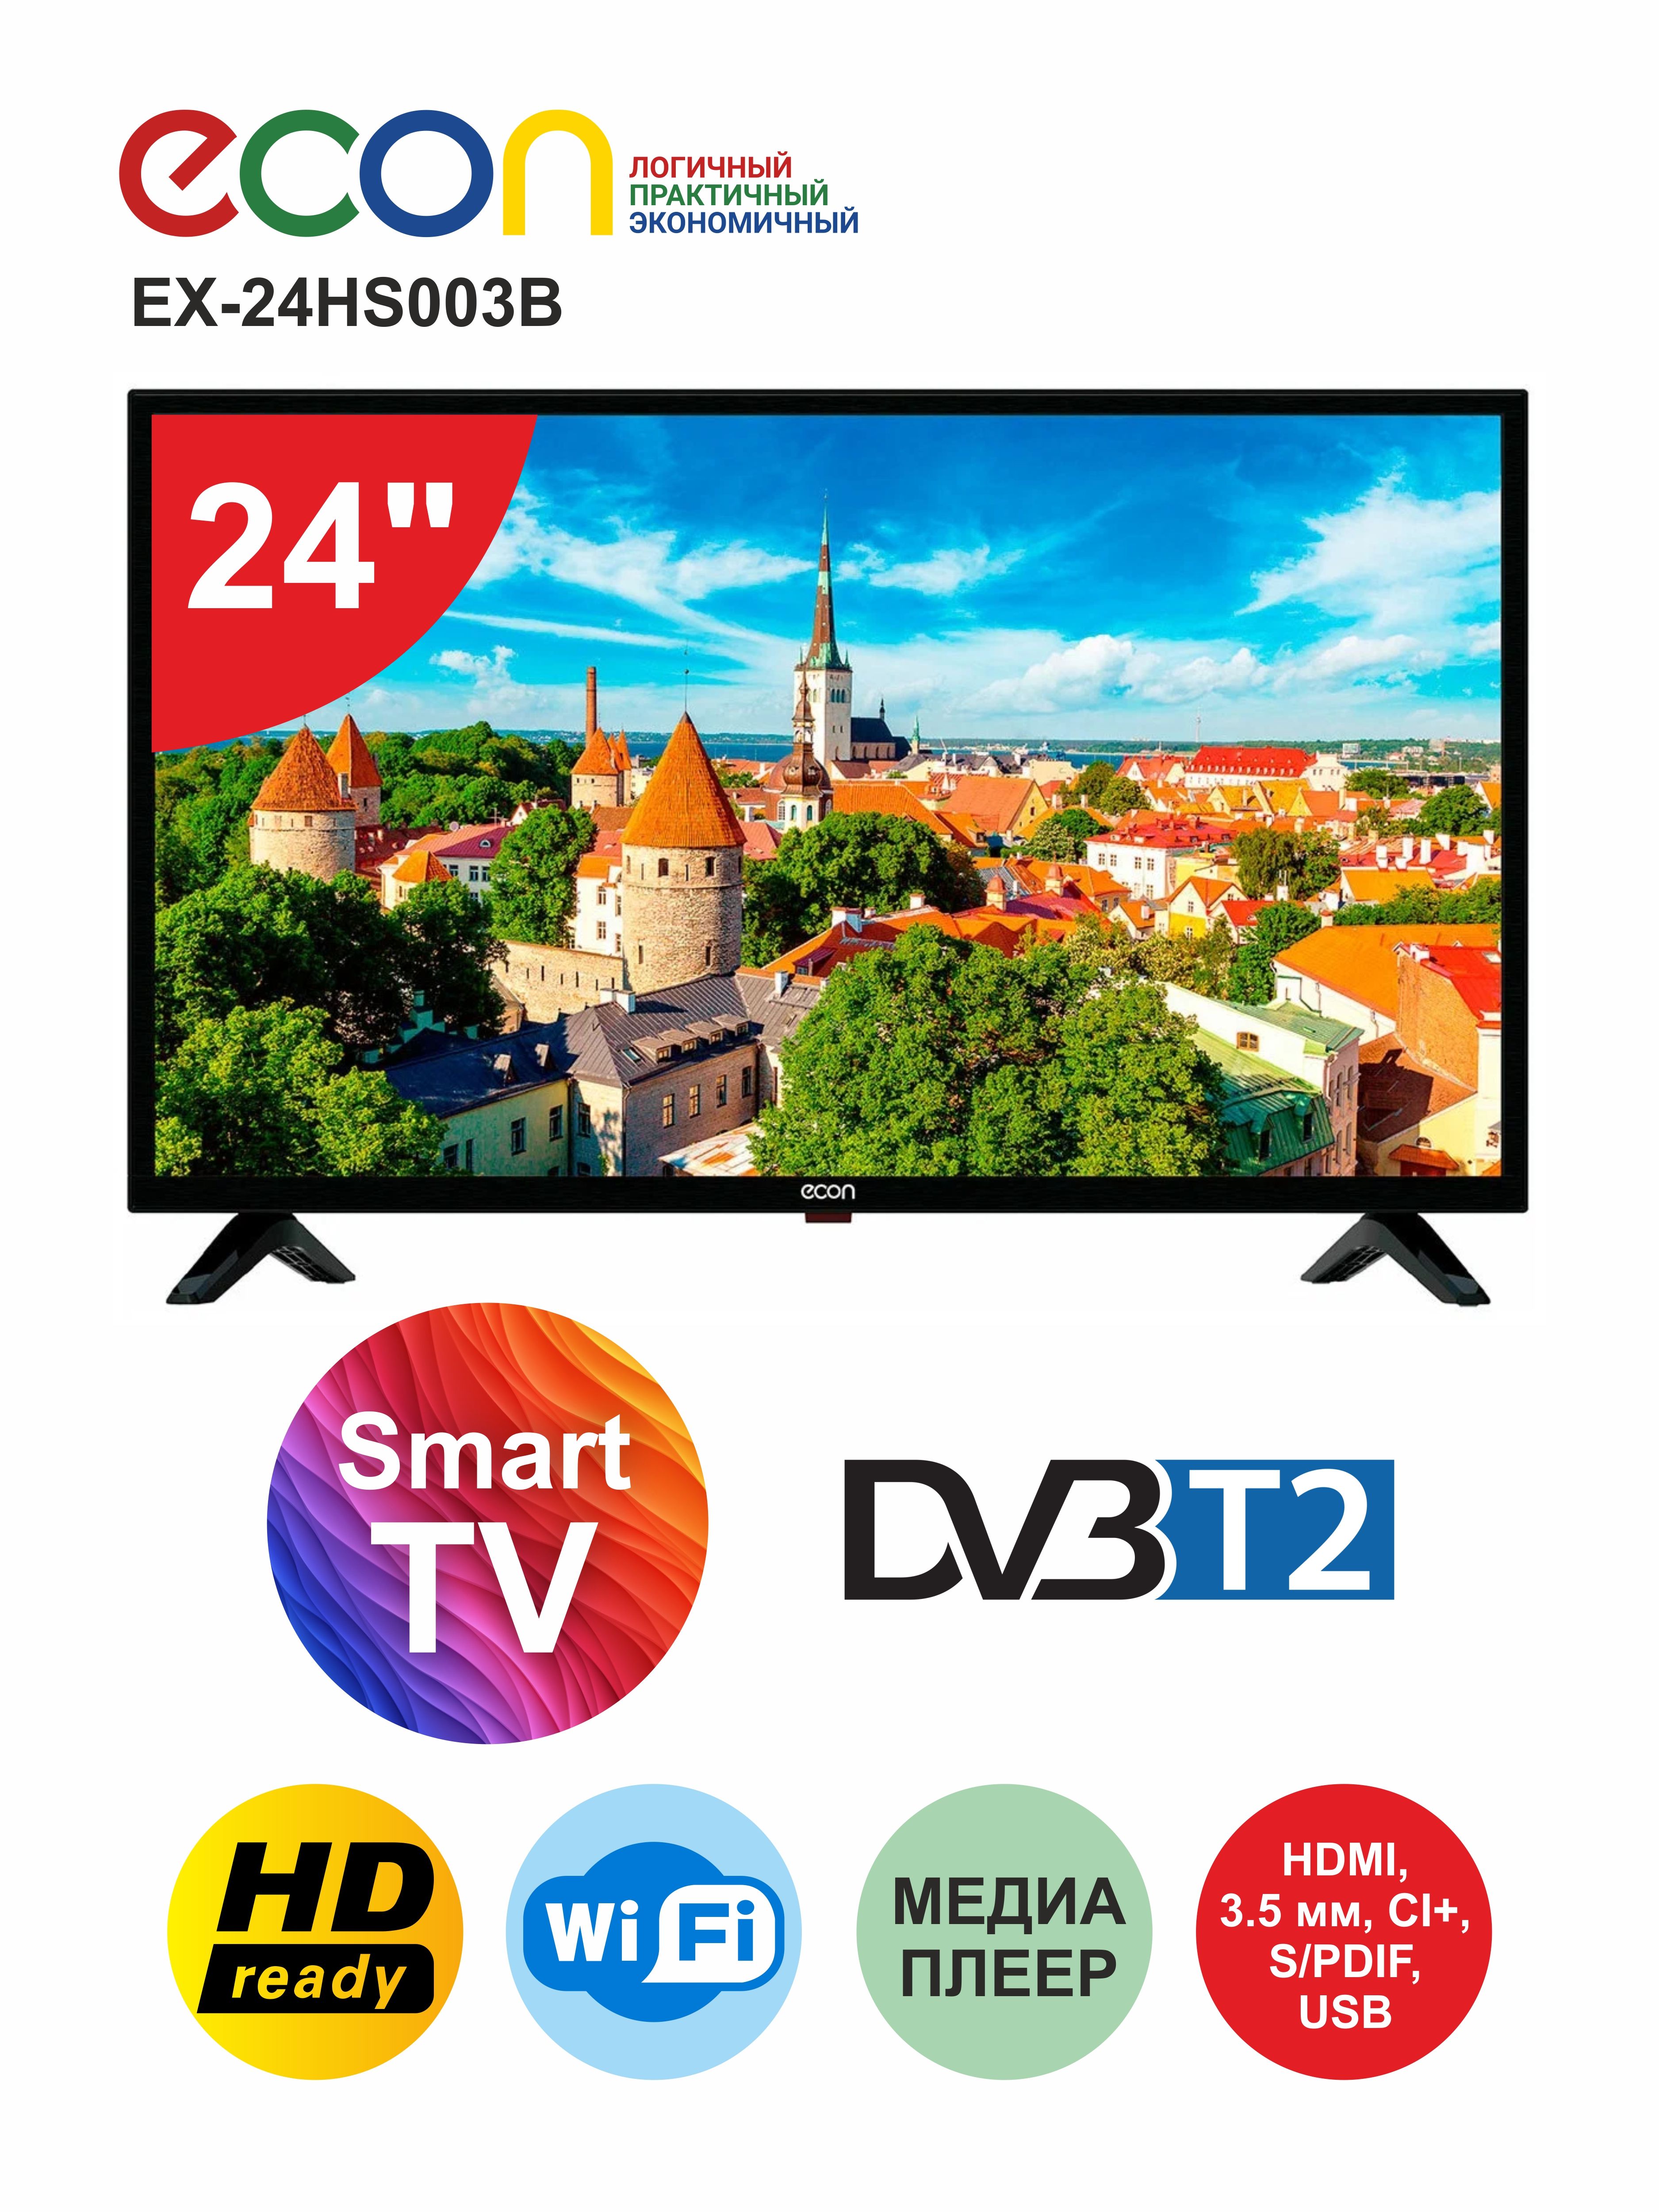 ECON 24 телевизор. Телевизор 24 ECON ex-24hs003b Smart отзывы. ТВ ECON 24 ex-24hs005b.